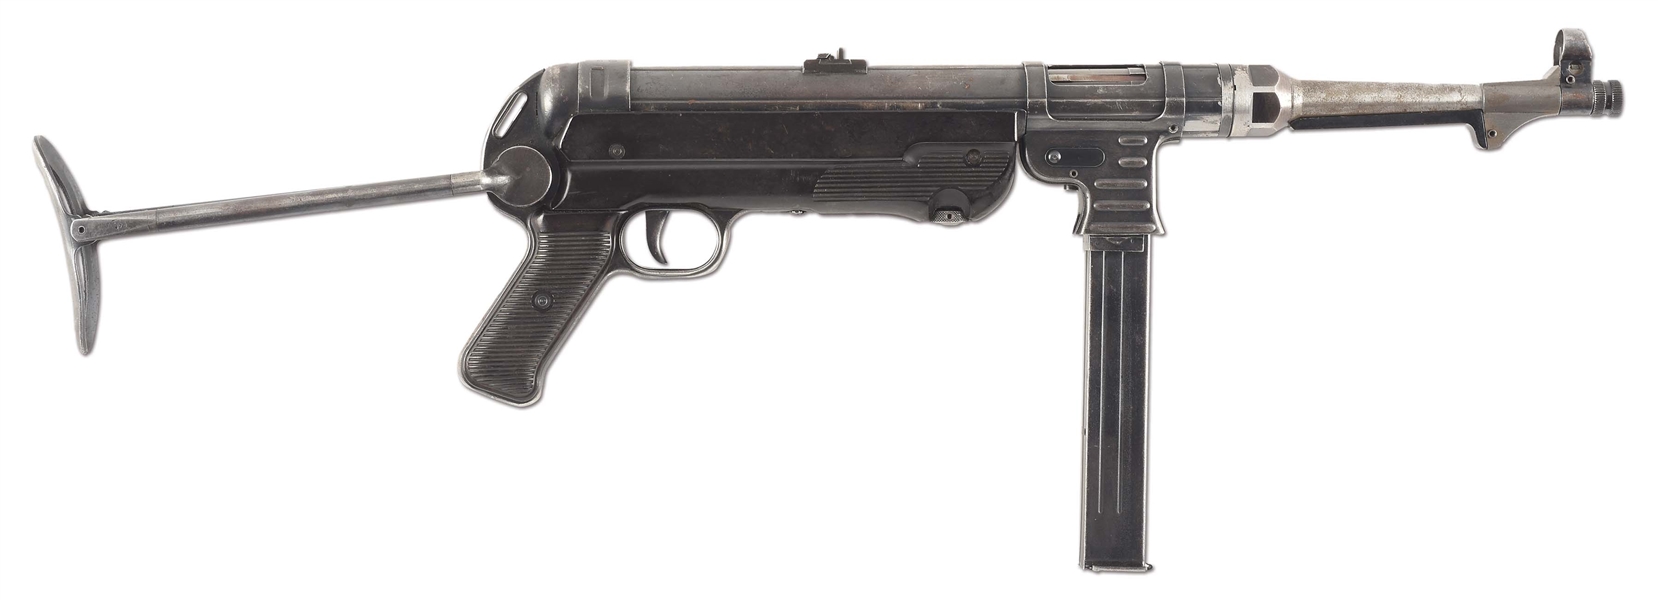 (N) OUTSTANDING MATCHING NUMBERED GERMAN WORLD WAR II MP-40 MACHINE GUN (CURIO AND RELIC).